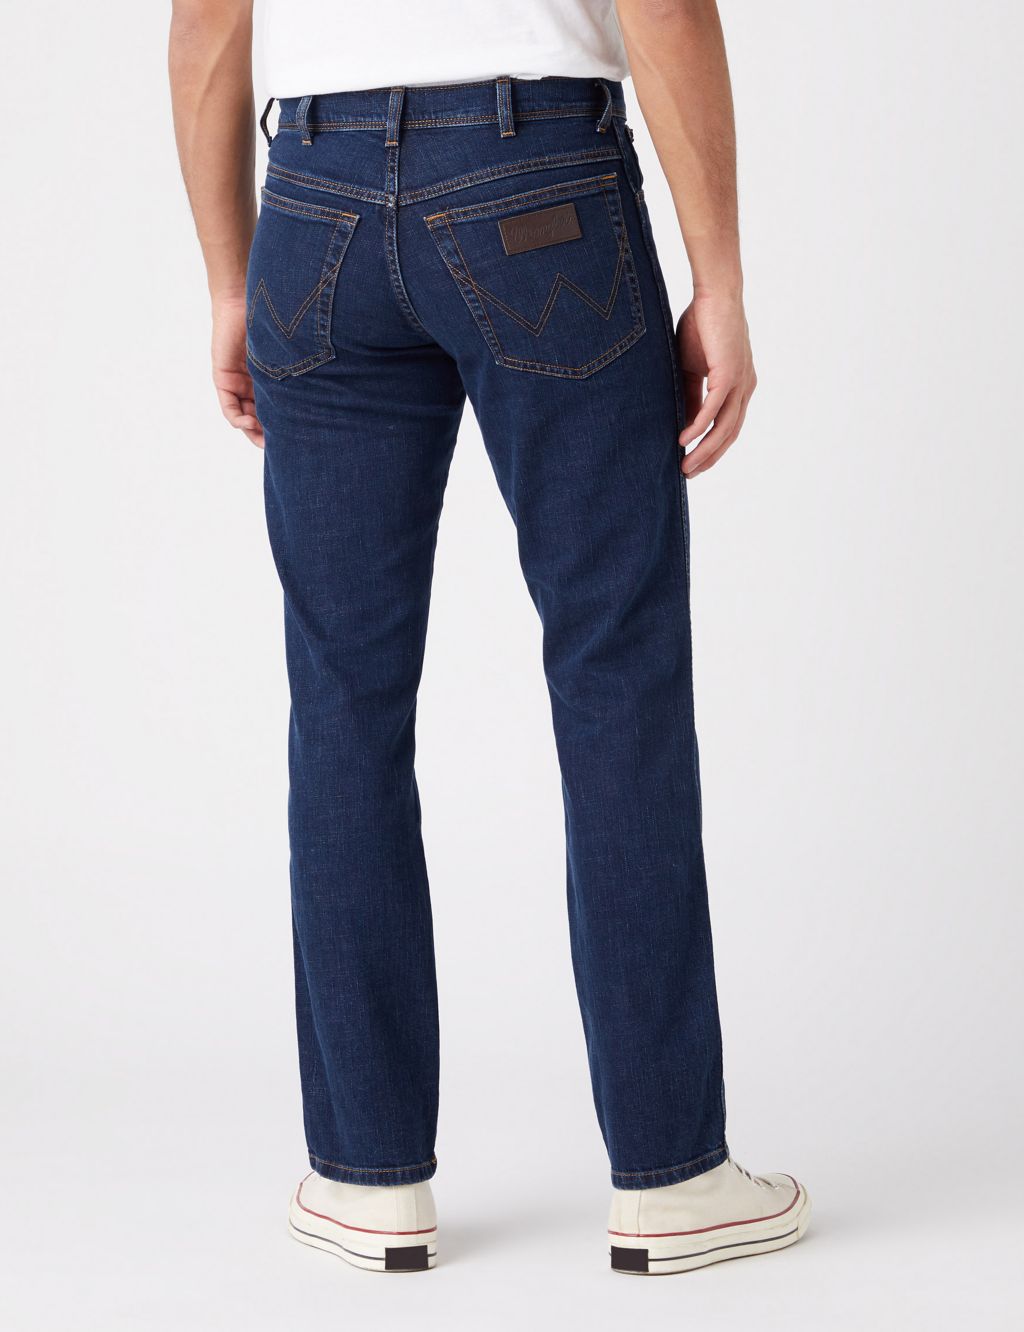 Texas Slim Fit 5 Pocket Jeans image 3